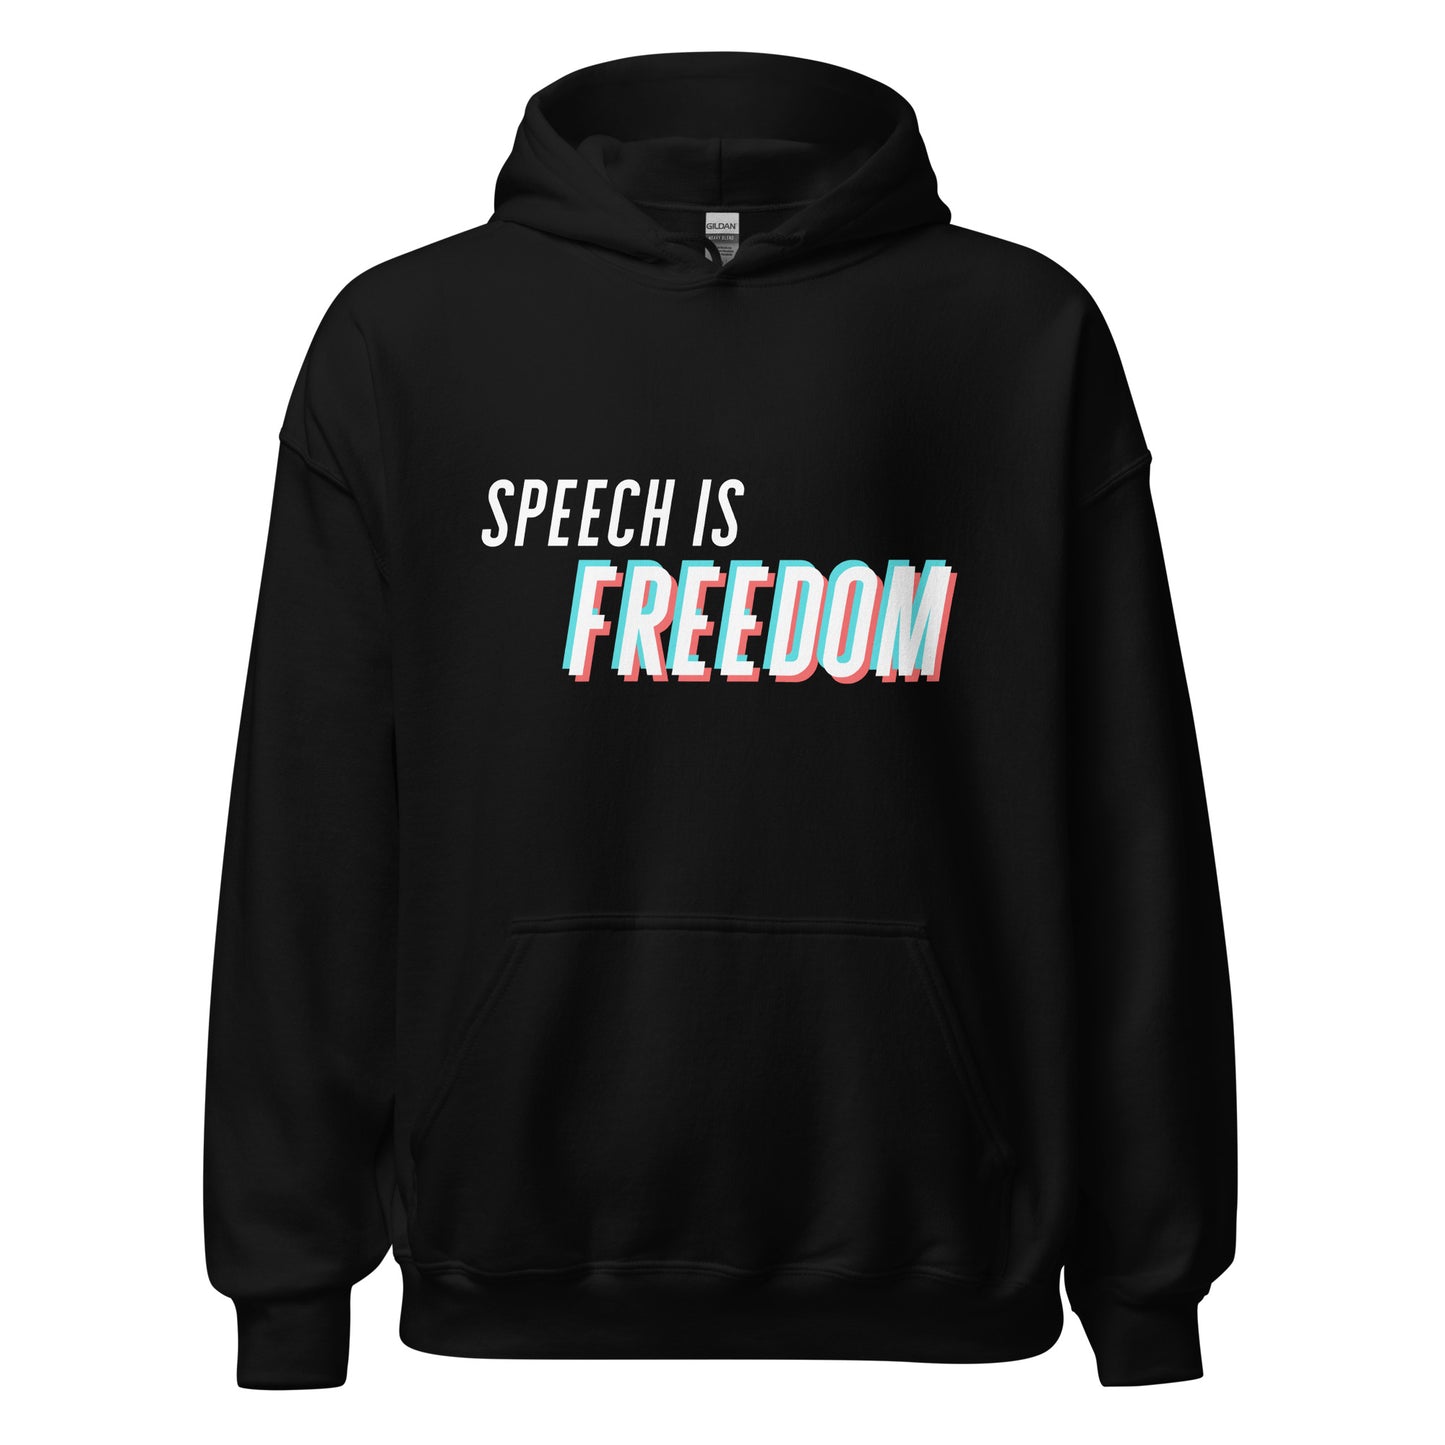 Hands Off My TikTok - Speech Is Freedom Unisex Hoodie